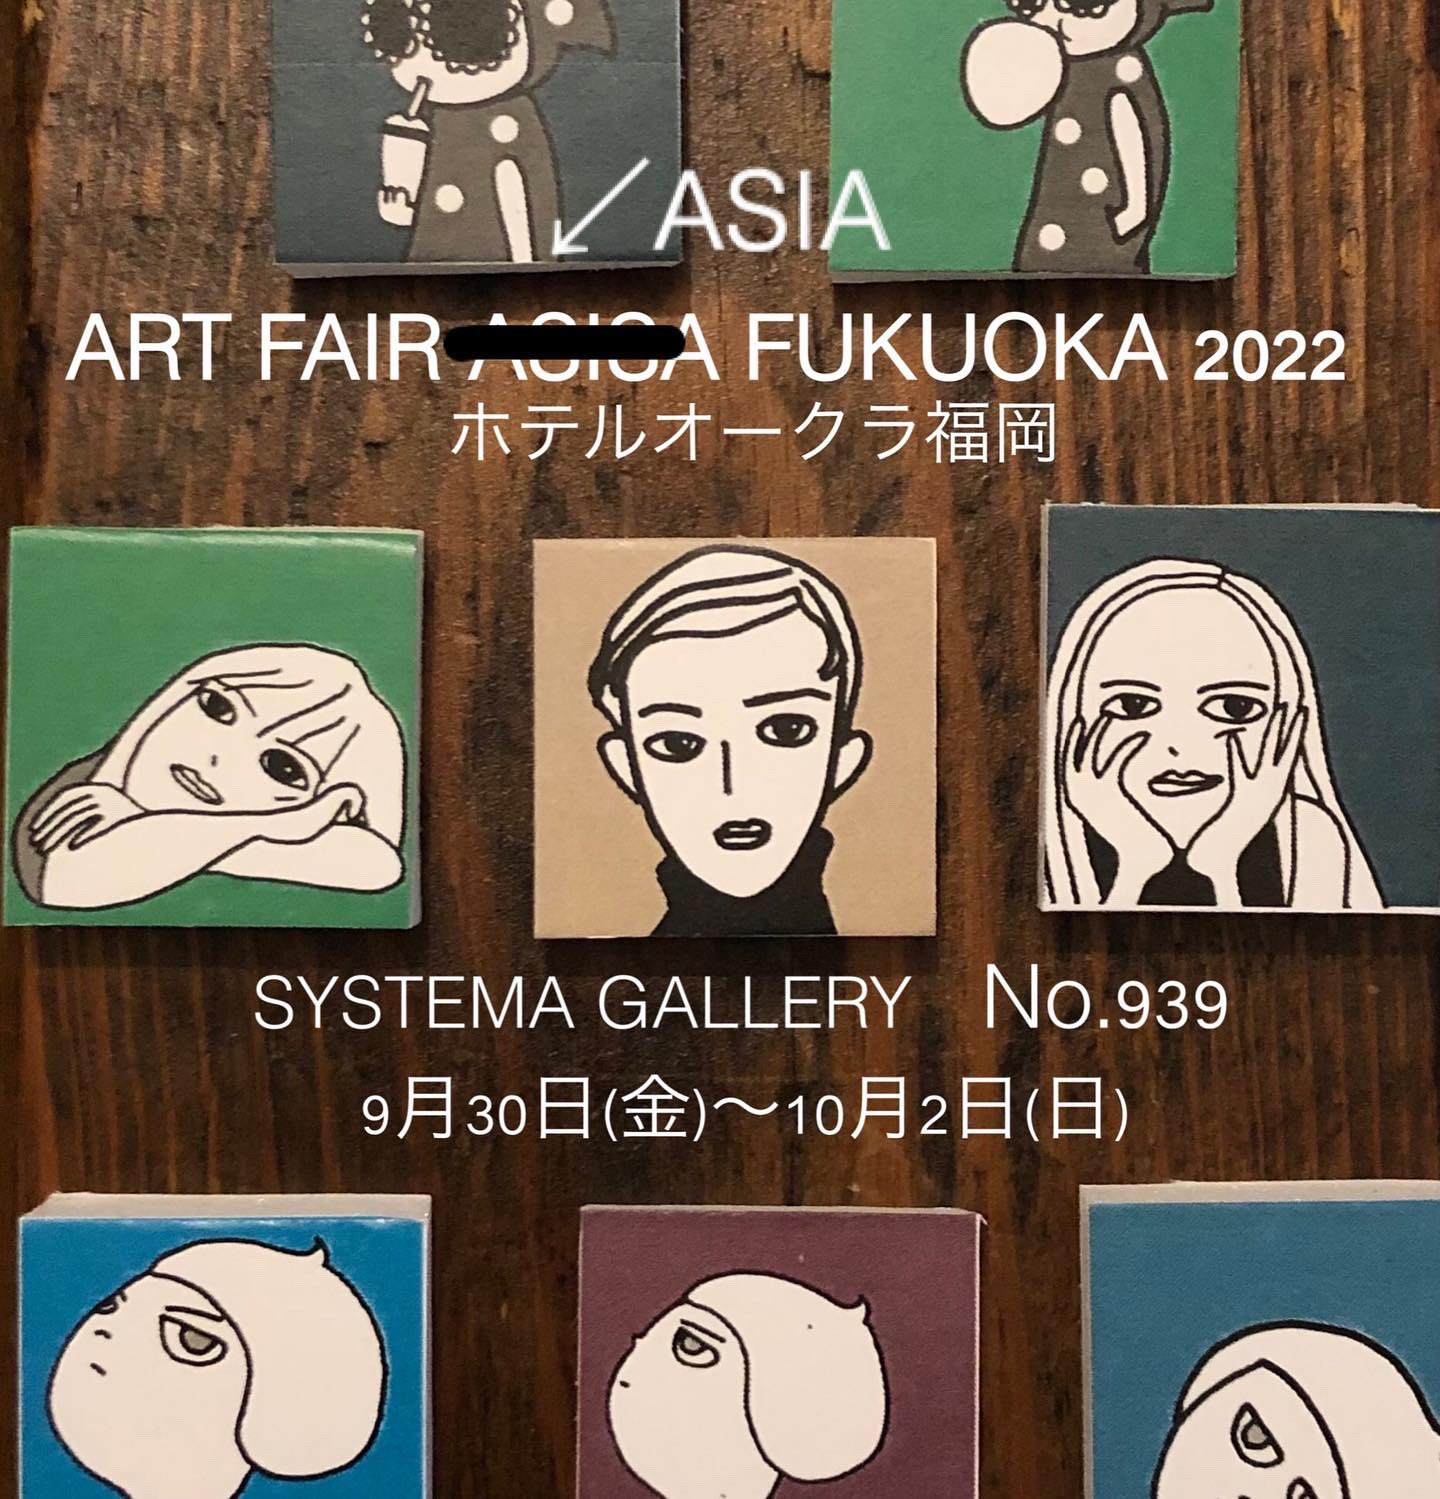 ART FAIR ASIA FUKUOKA 2022 9月30日(金)から開催です♪